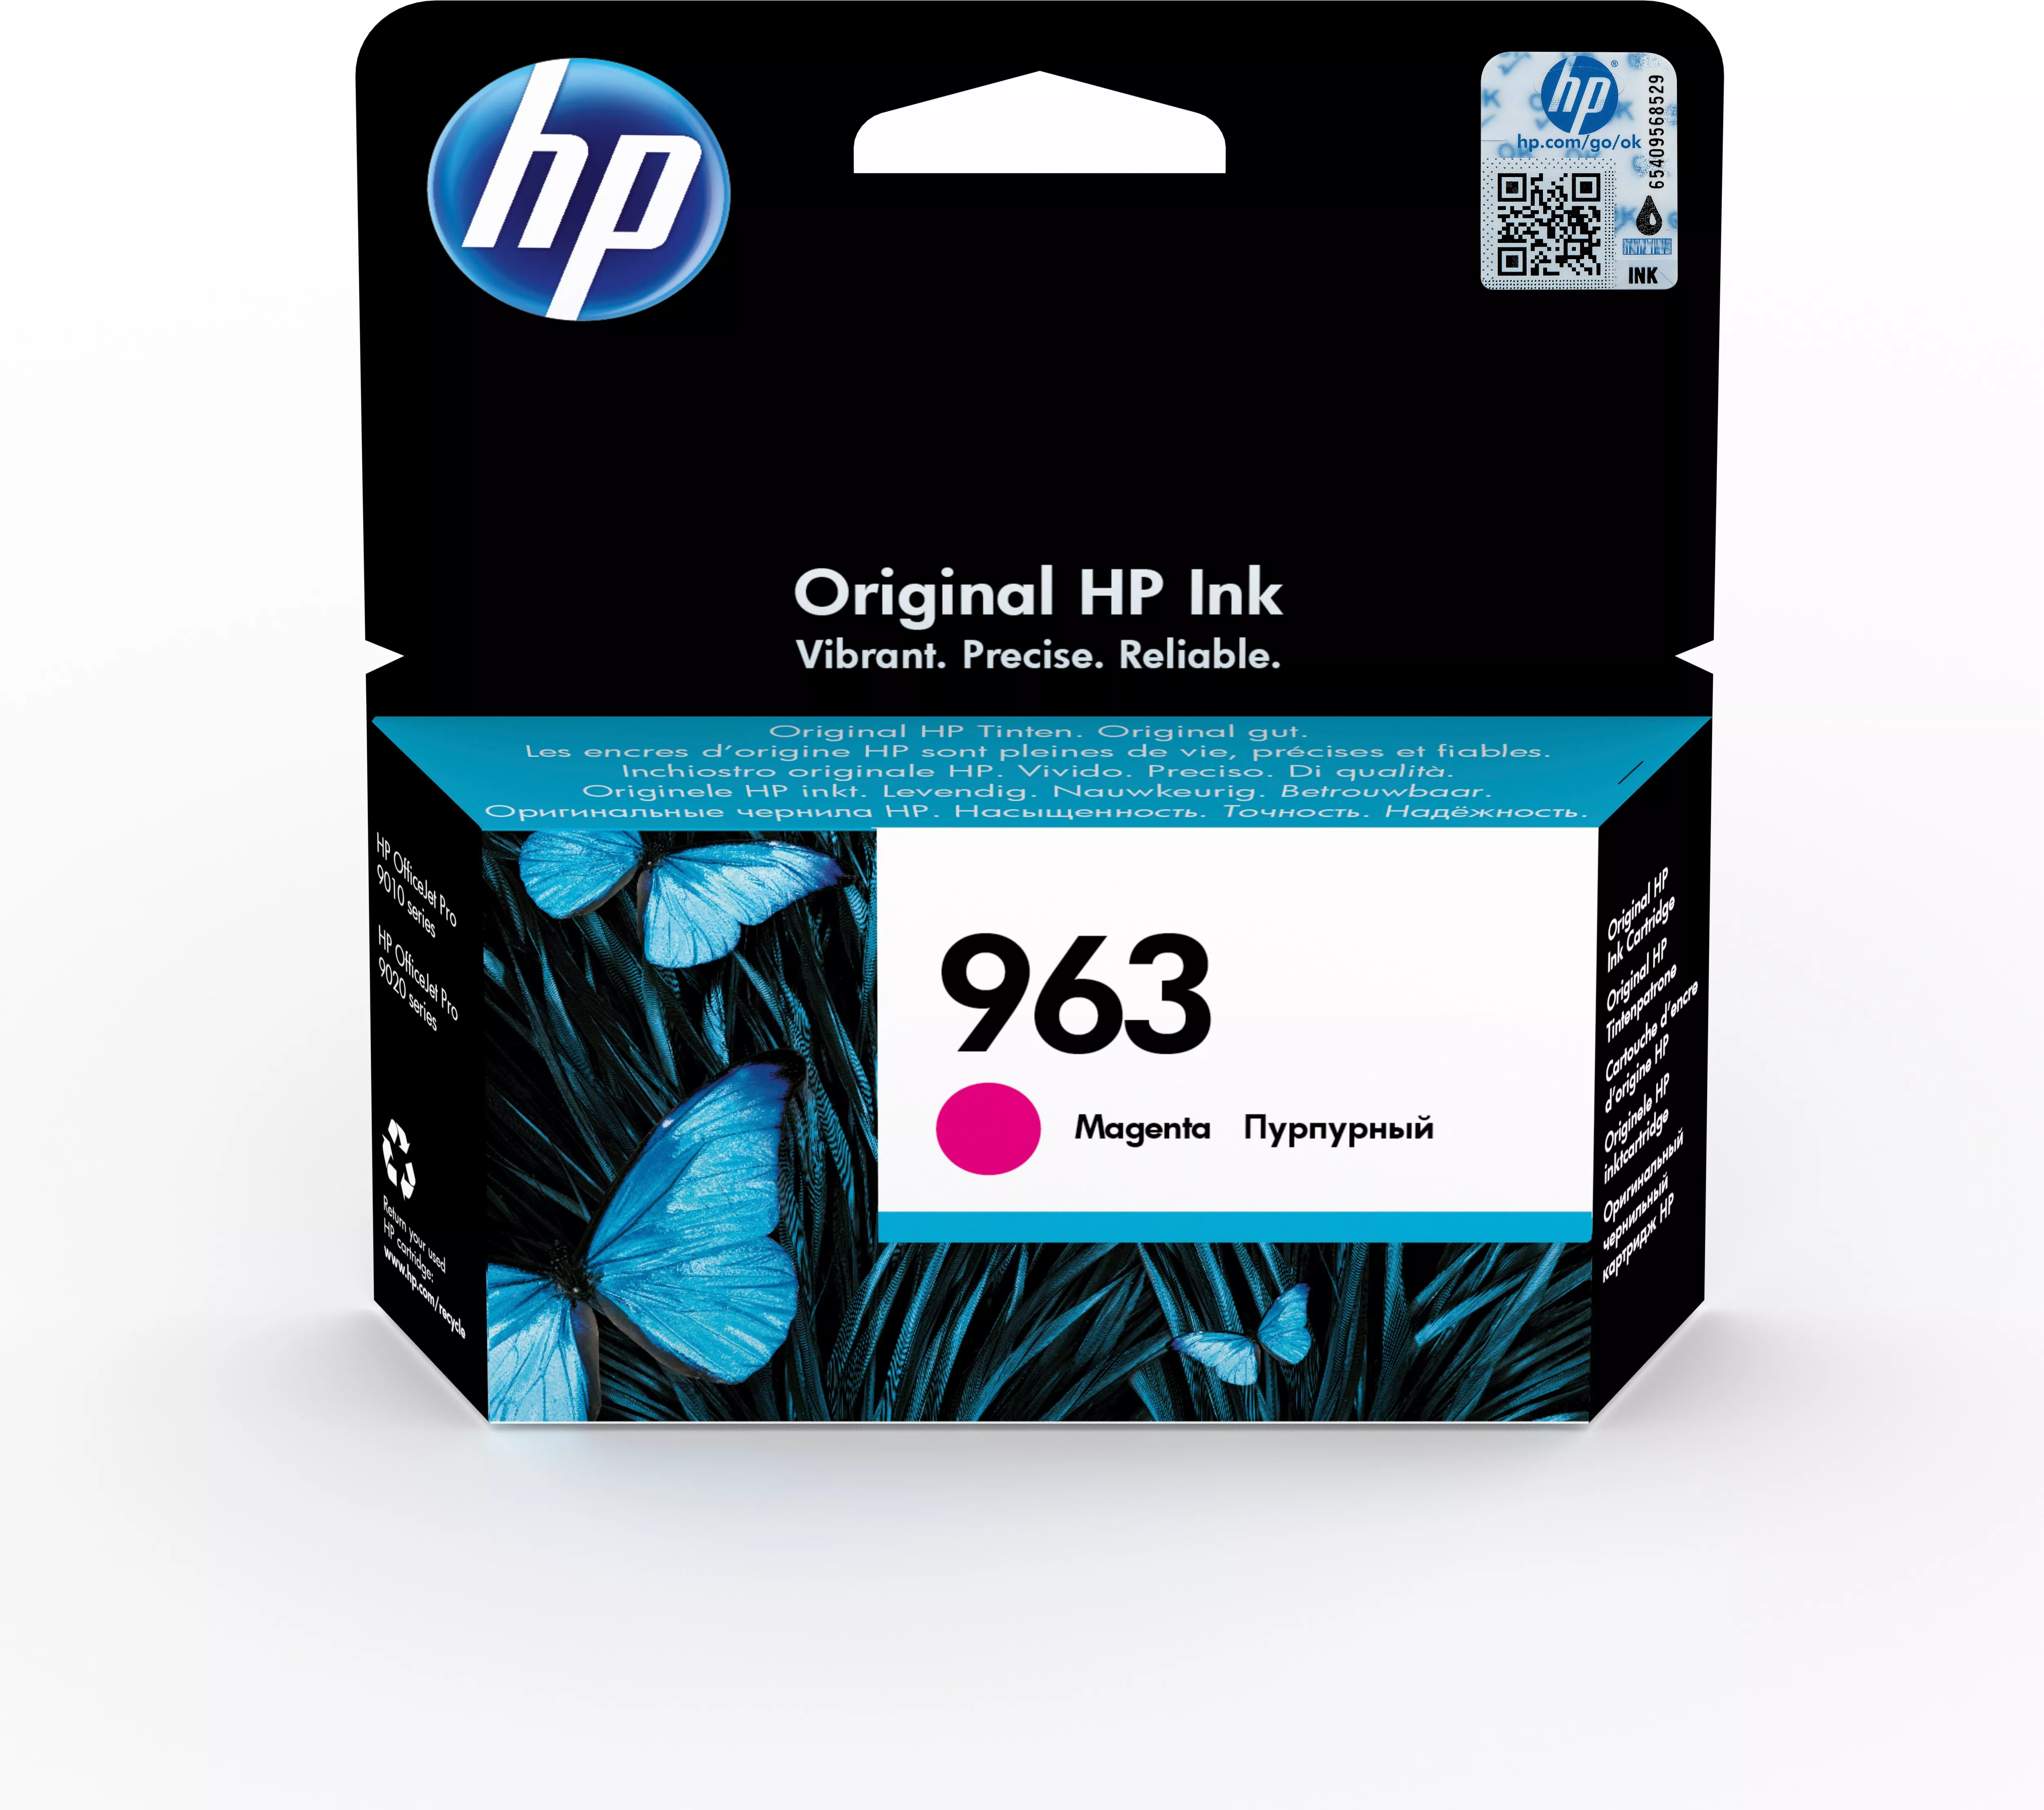 Achat HP 963 Magenta Original Ink Cartridge au meilleur prix